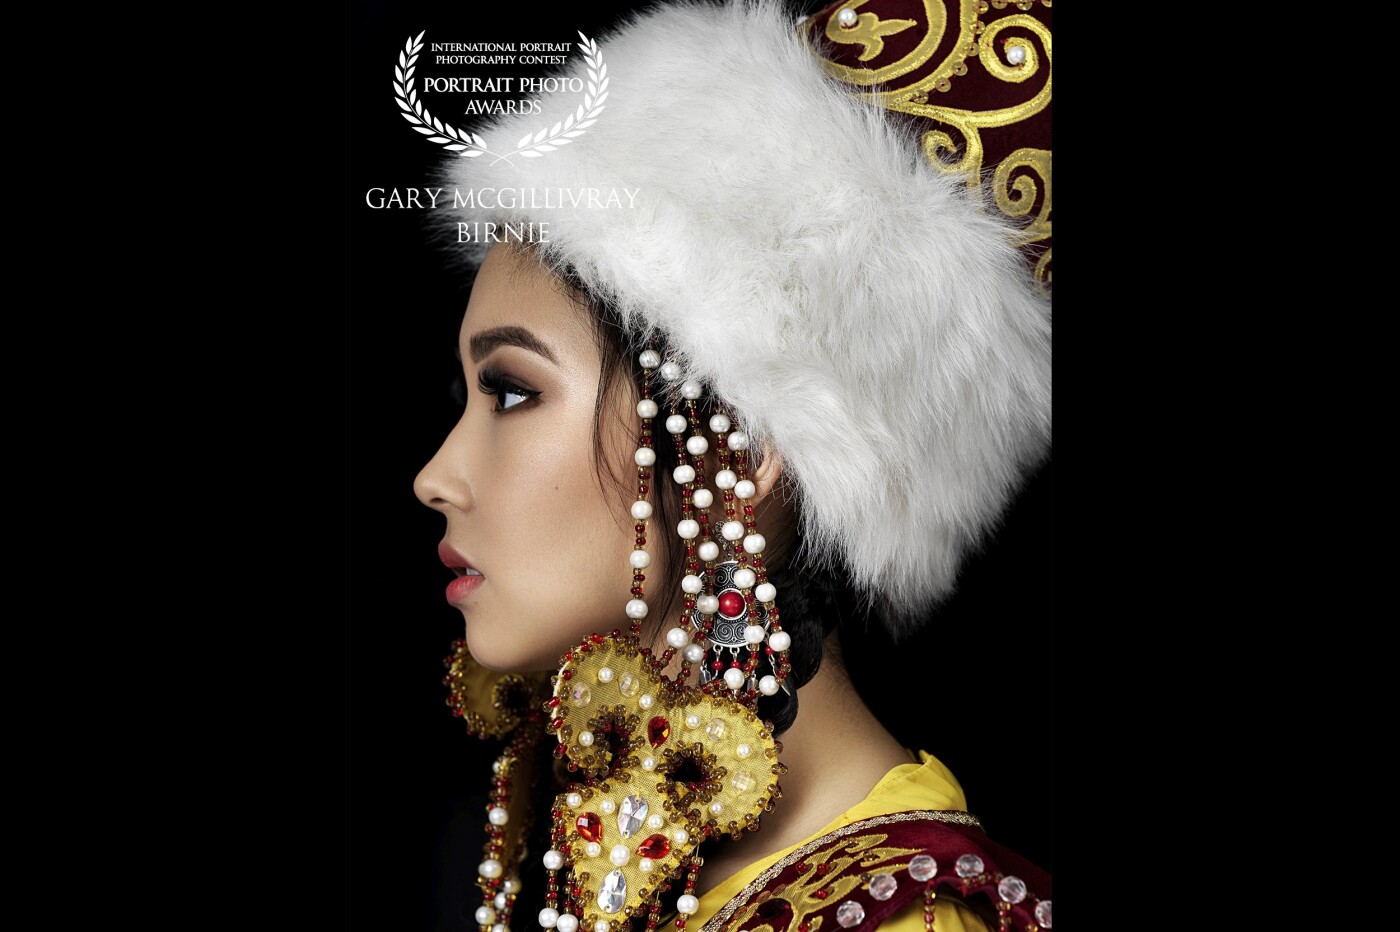 Kazakhstan national dress, image was taken prior to the Nauryz, Kazakhstan's New year (21-23 March 2019)<br />
Model: Dinara from modeling agency @KS_Models Atyrau<br />
HMUA: @makeup_zhanna_atyrau<br />
Camera: Hasselblad H6d50c Lens: HC 80mm<br />
www.mcgillivraybirniephotography.com<br />
https://www.instagram.com/mcgillivraybirniephotography/